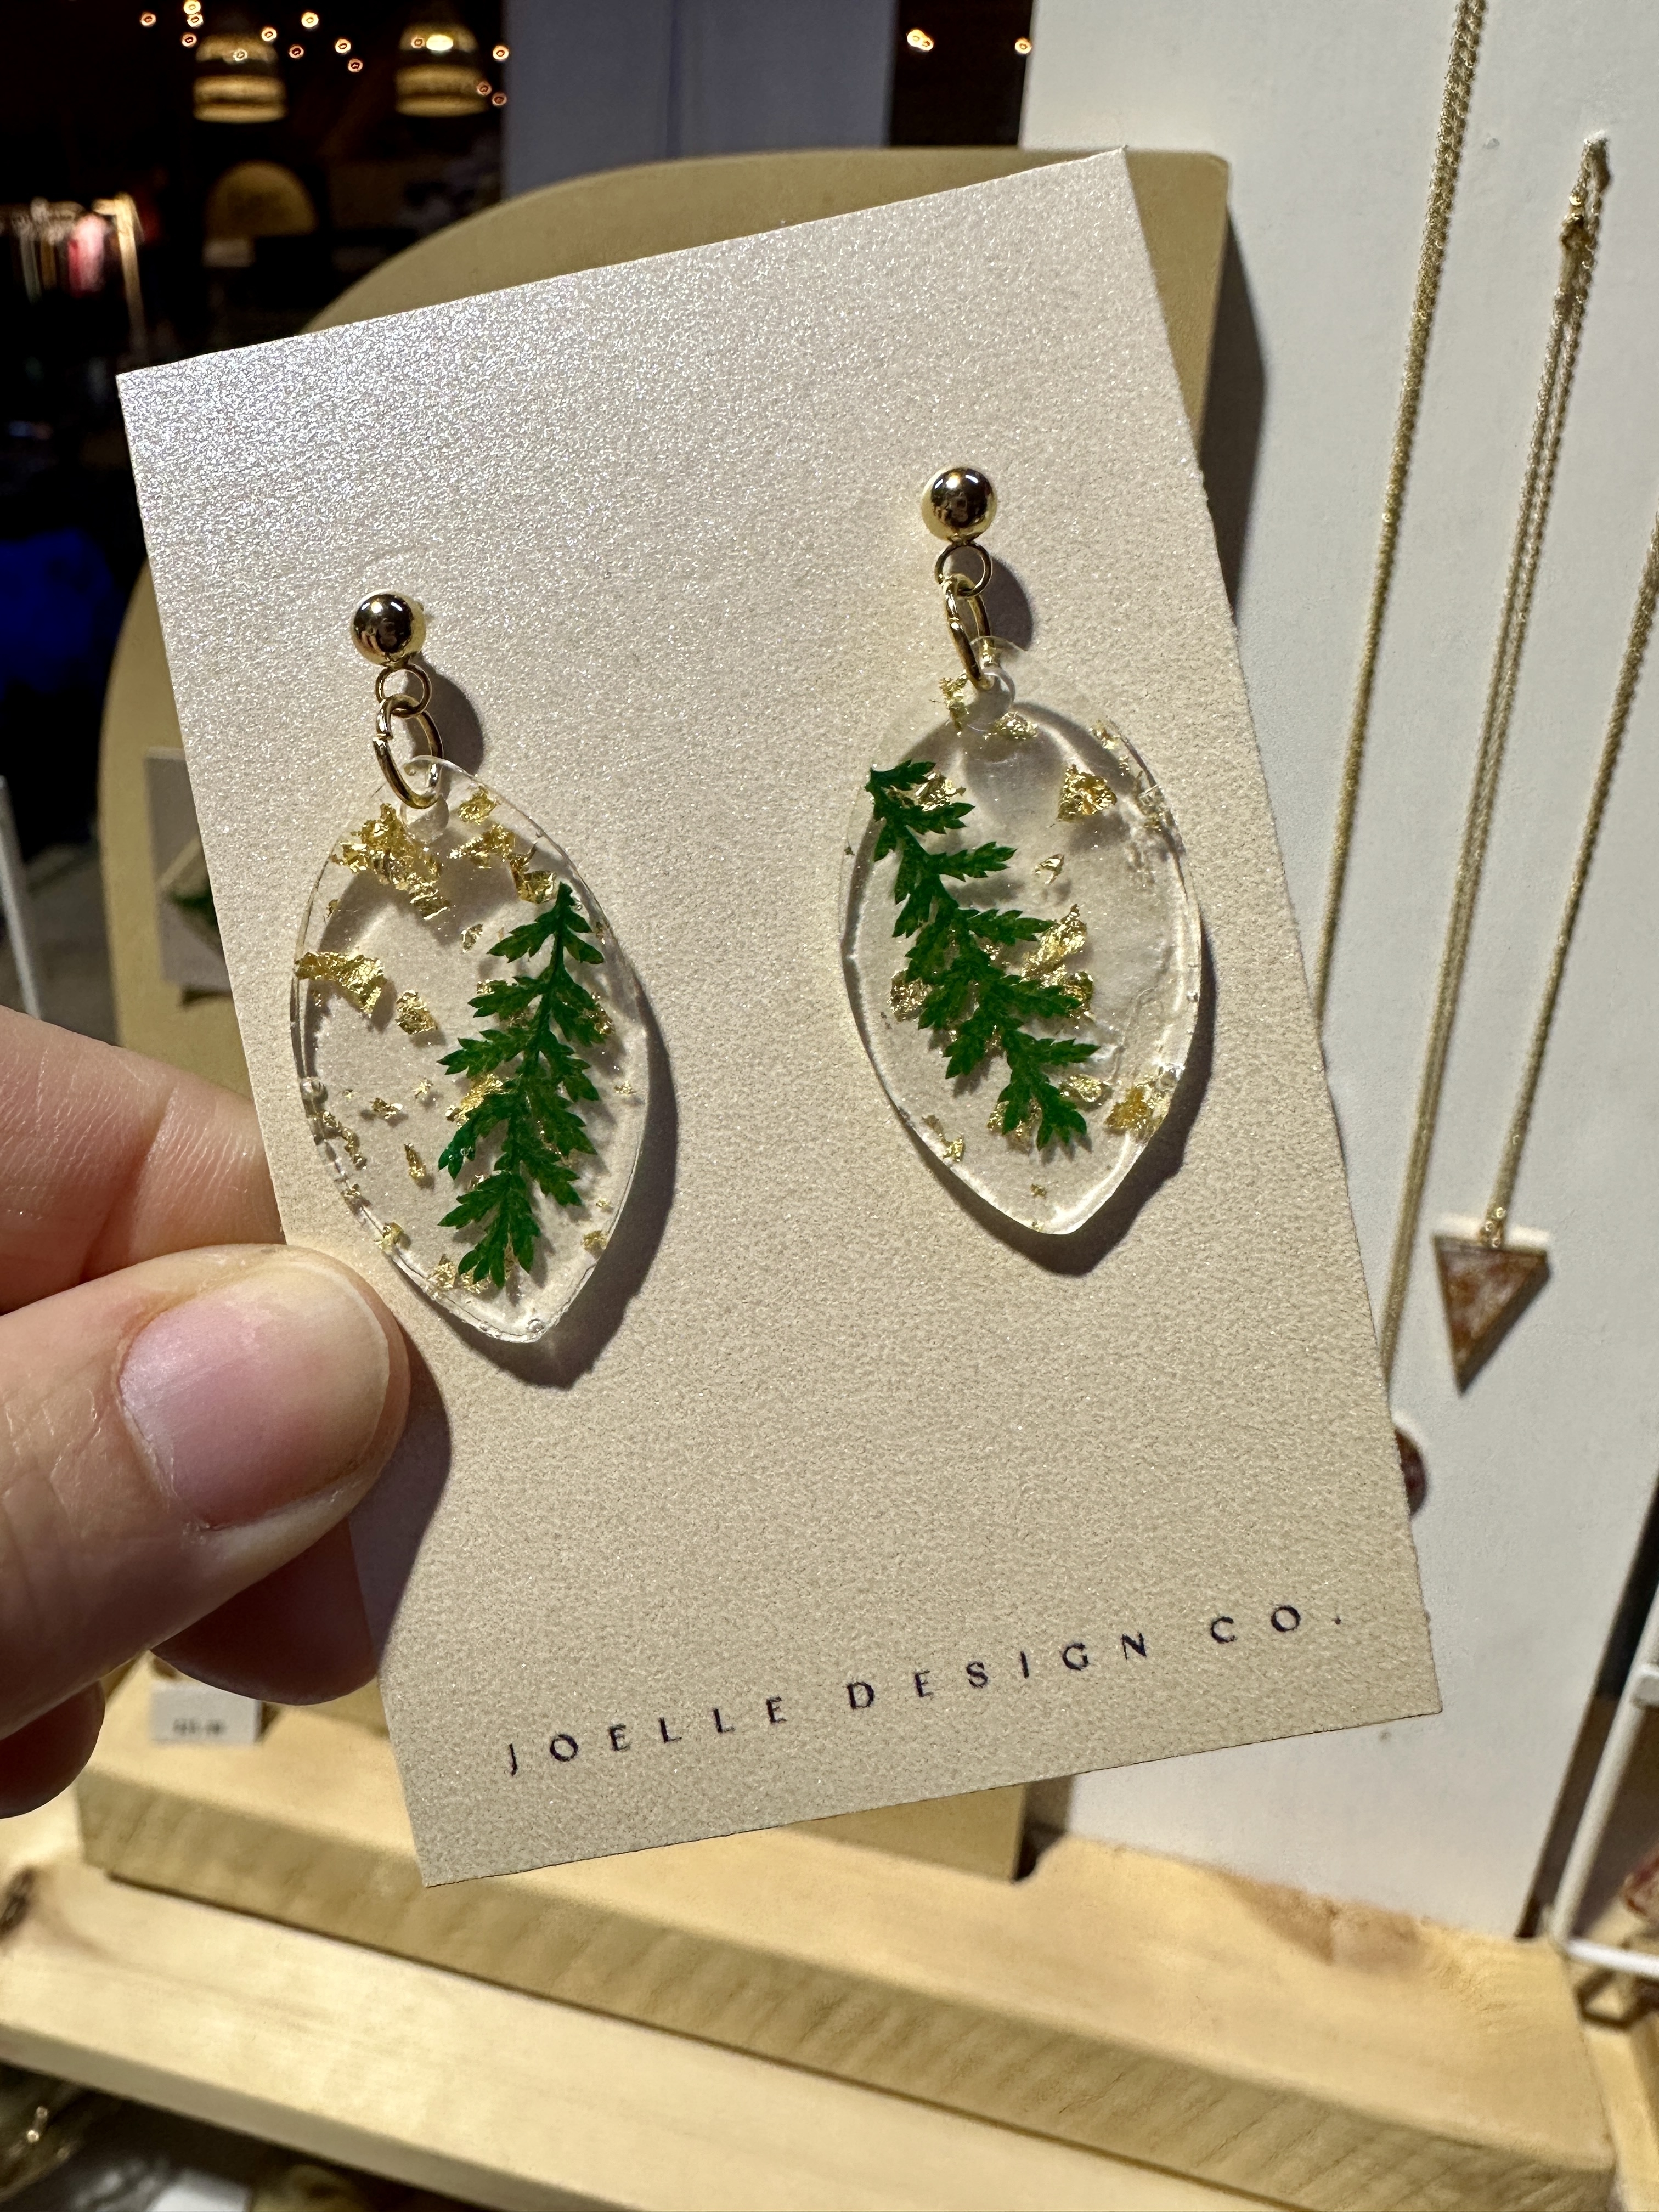 A pair of Joelle Design Co. earrings